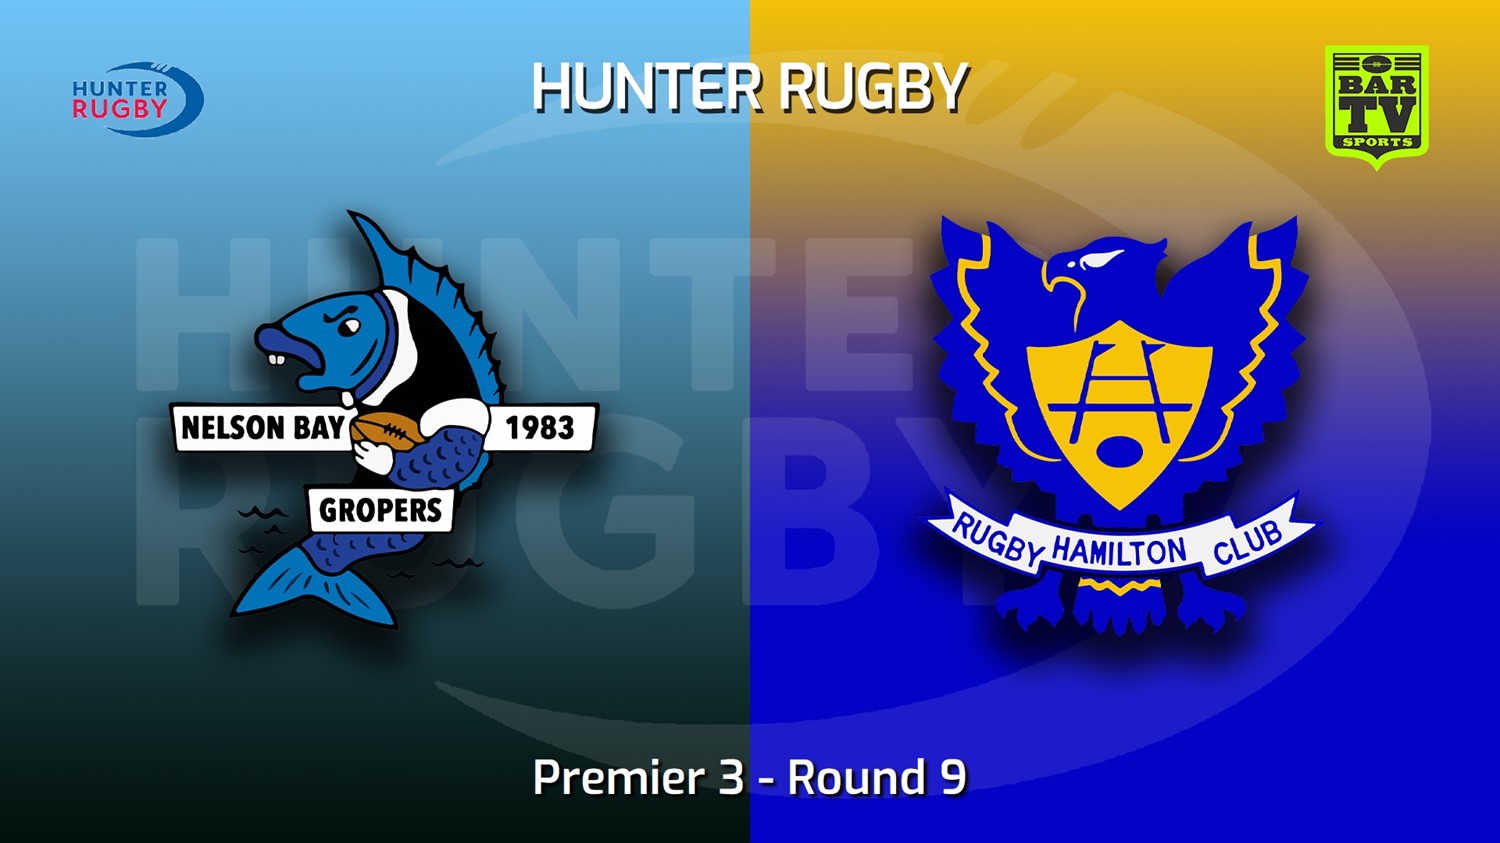 220625-Hunter Rugby Round 9 - Premier 3 - Nelson Bay Gropers v Hamilton Hawks Slate Image